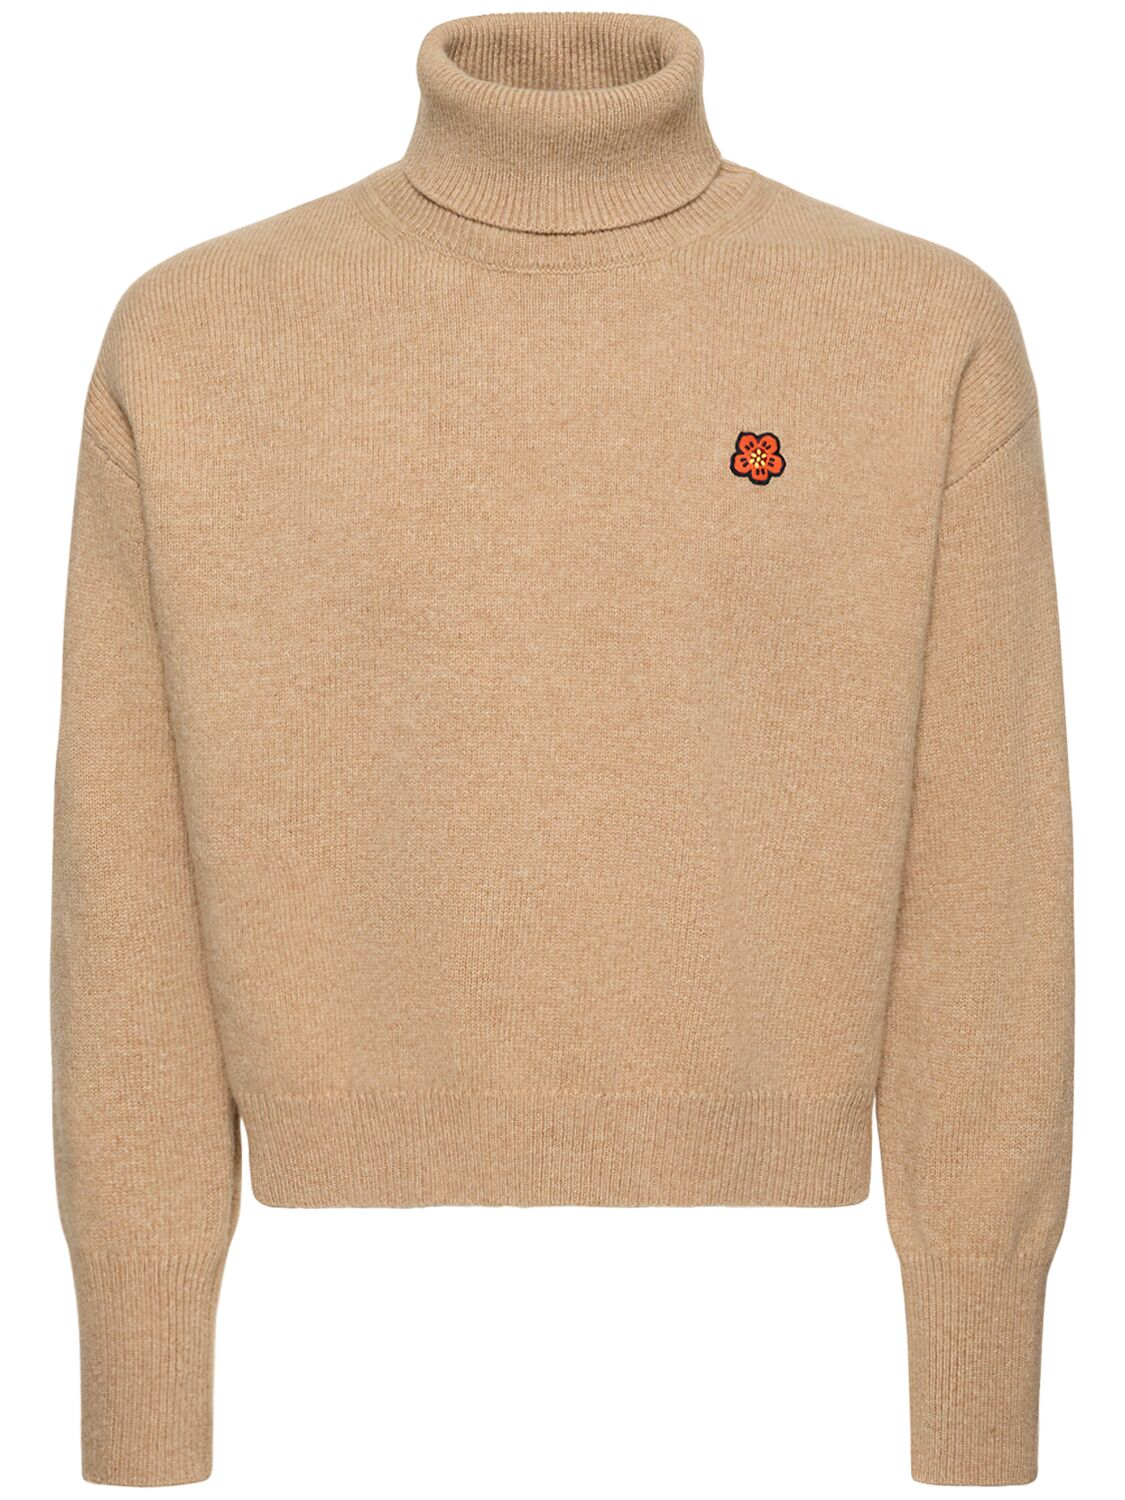 Kenzo Crest Boxy Turtleneck Wool Sweater In Tobacco